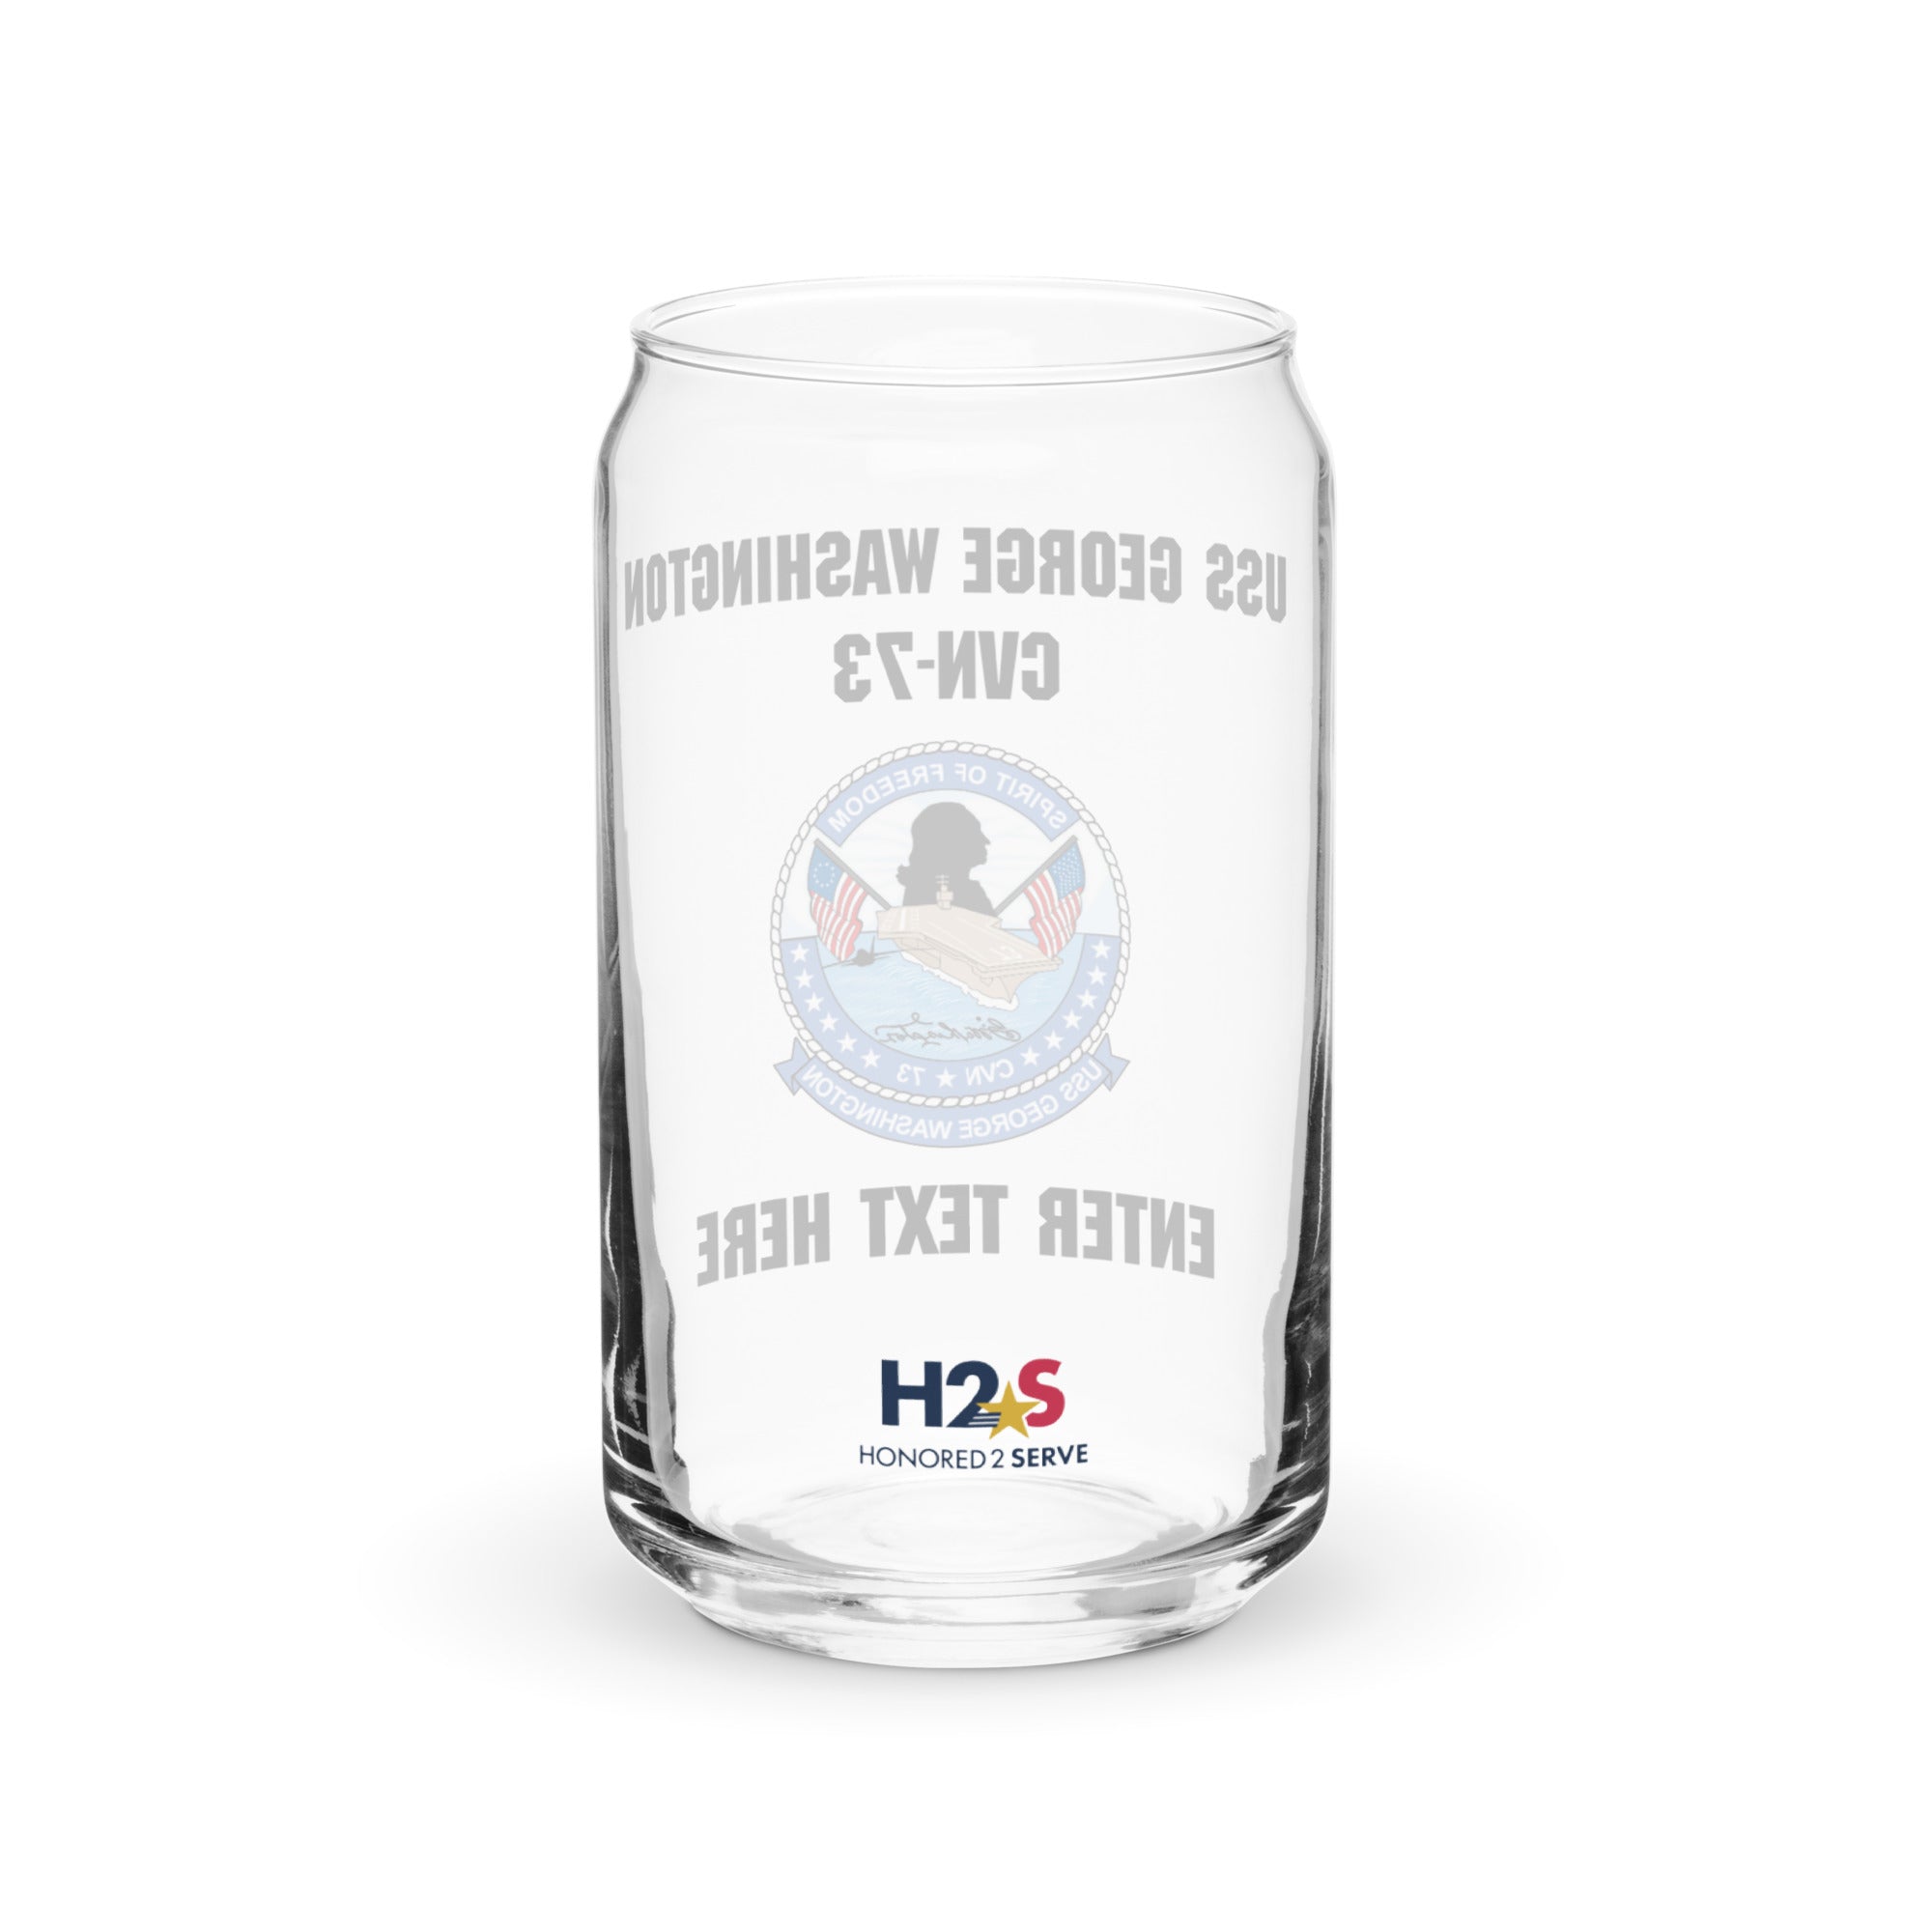 Customizable USS GEORGE WASHINGTON Can-shaped glass